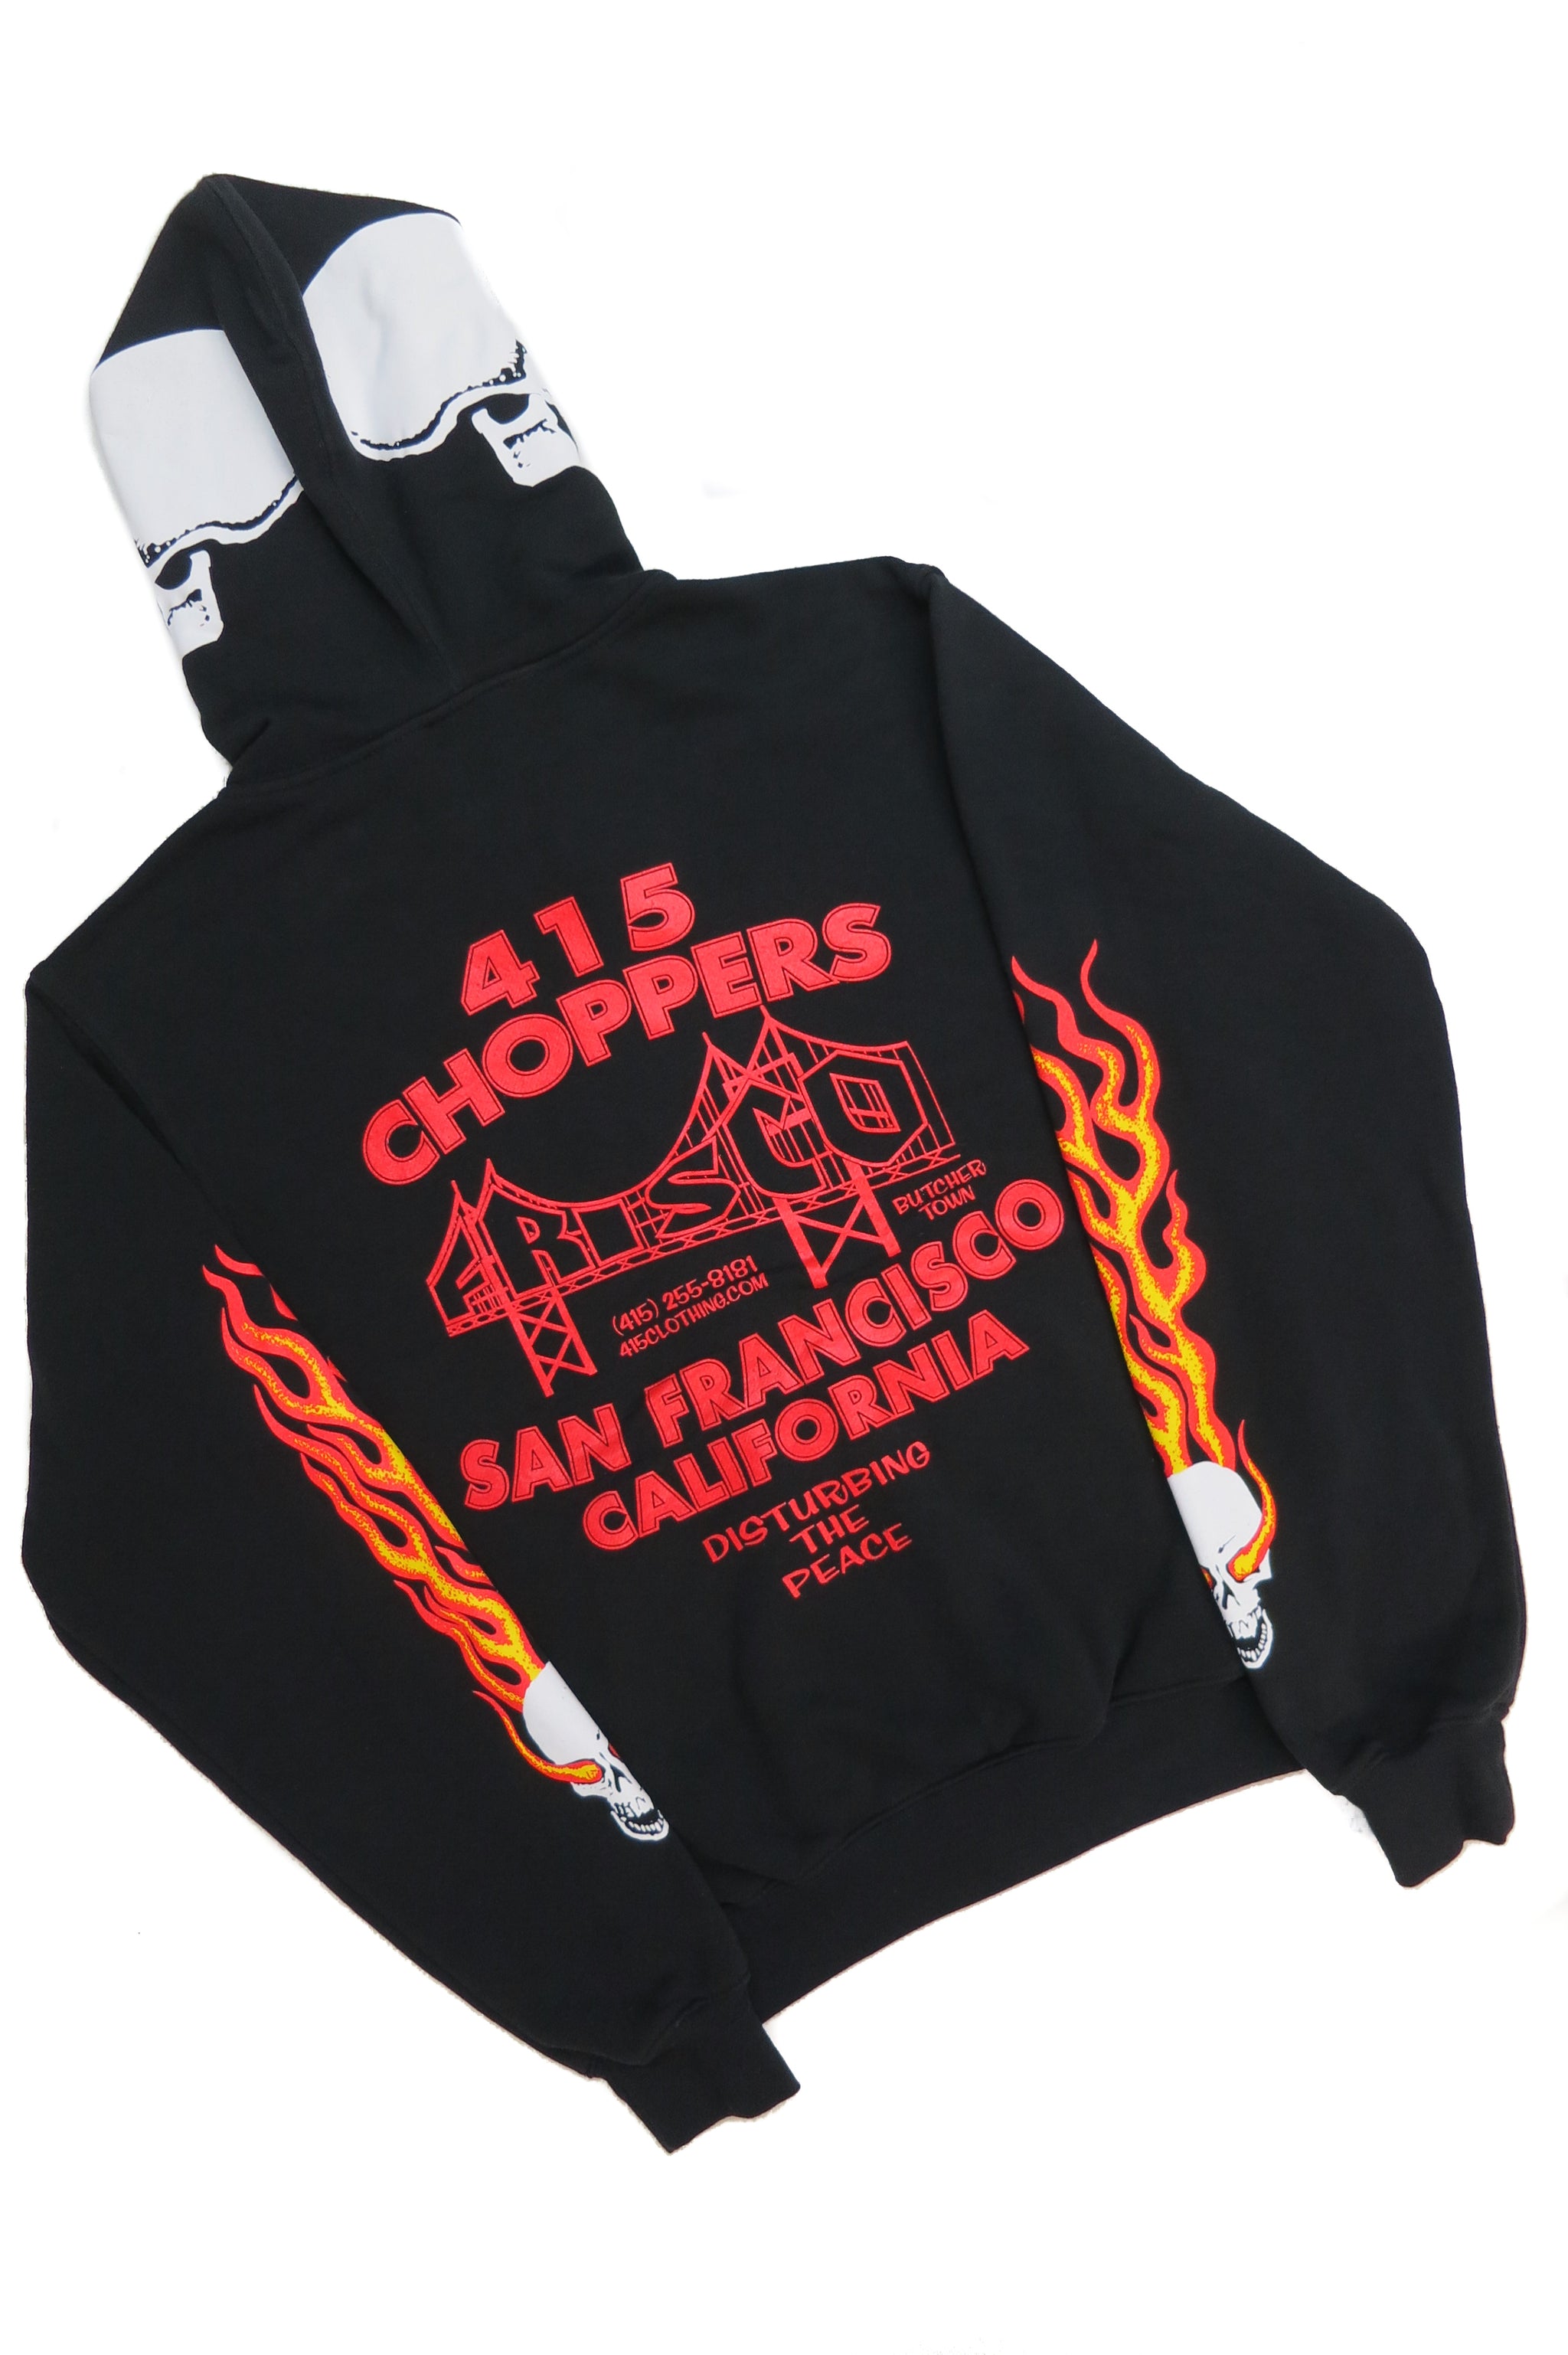 Skulls & Frisco Hooded Zipper Sweatshirt - 415 Clothing,